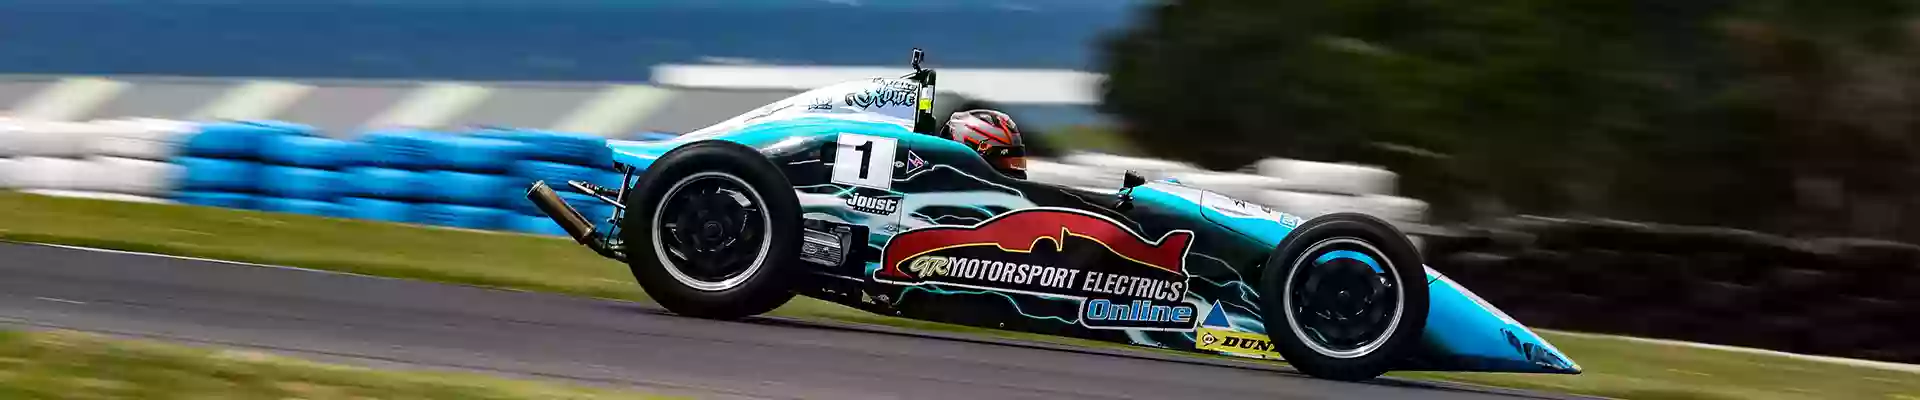 GR Motorsport Electrics